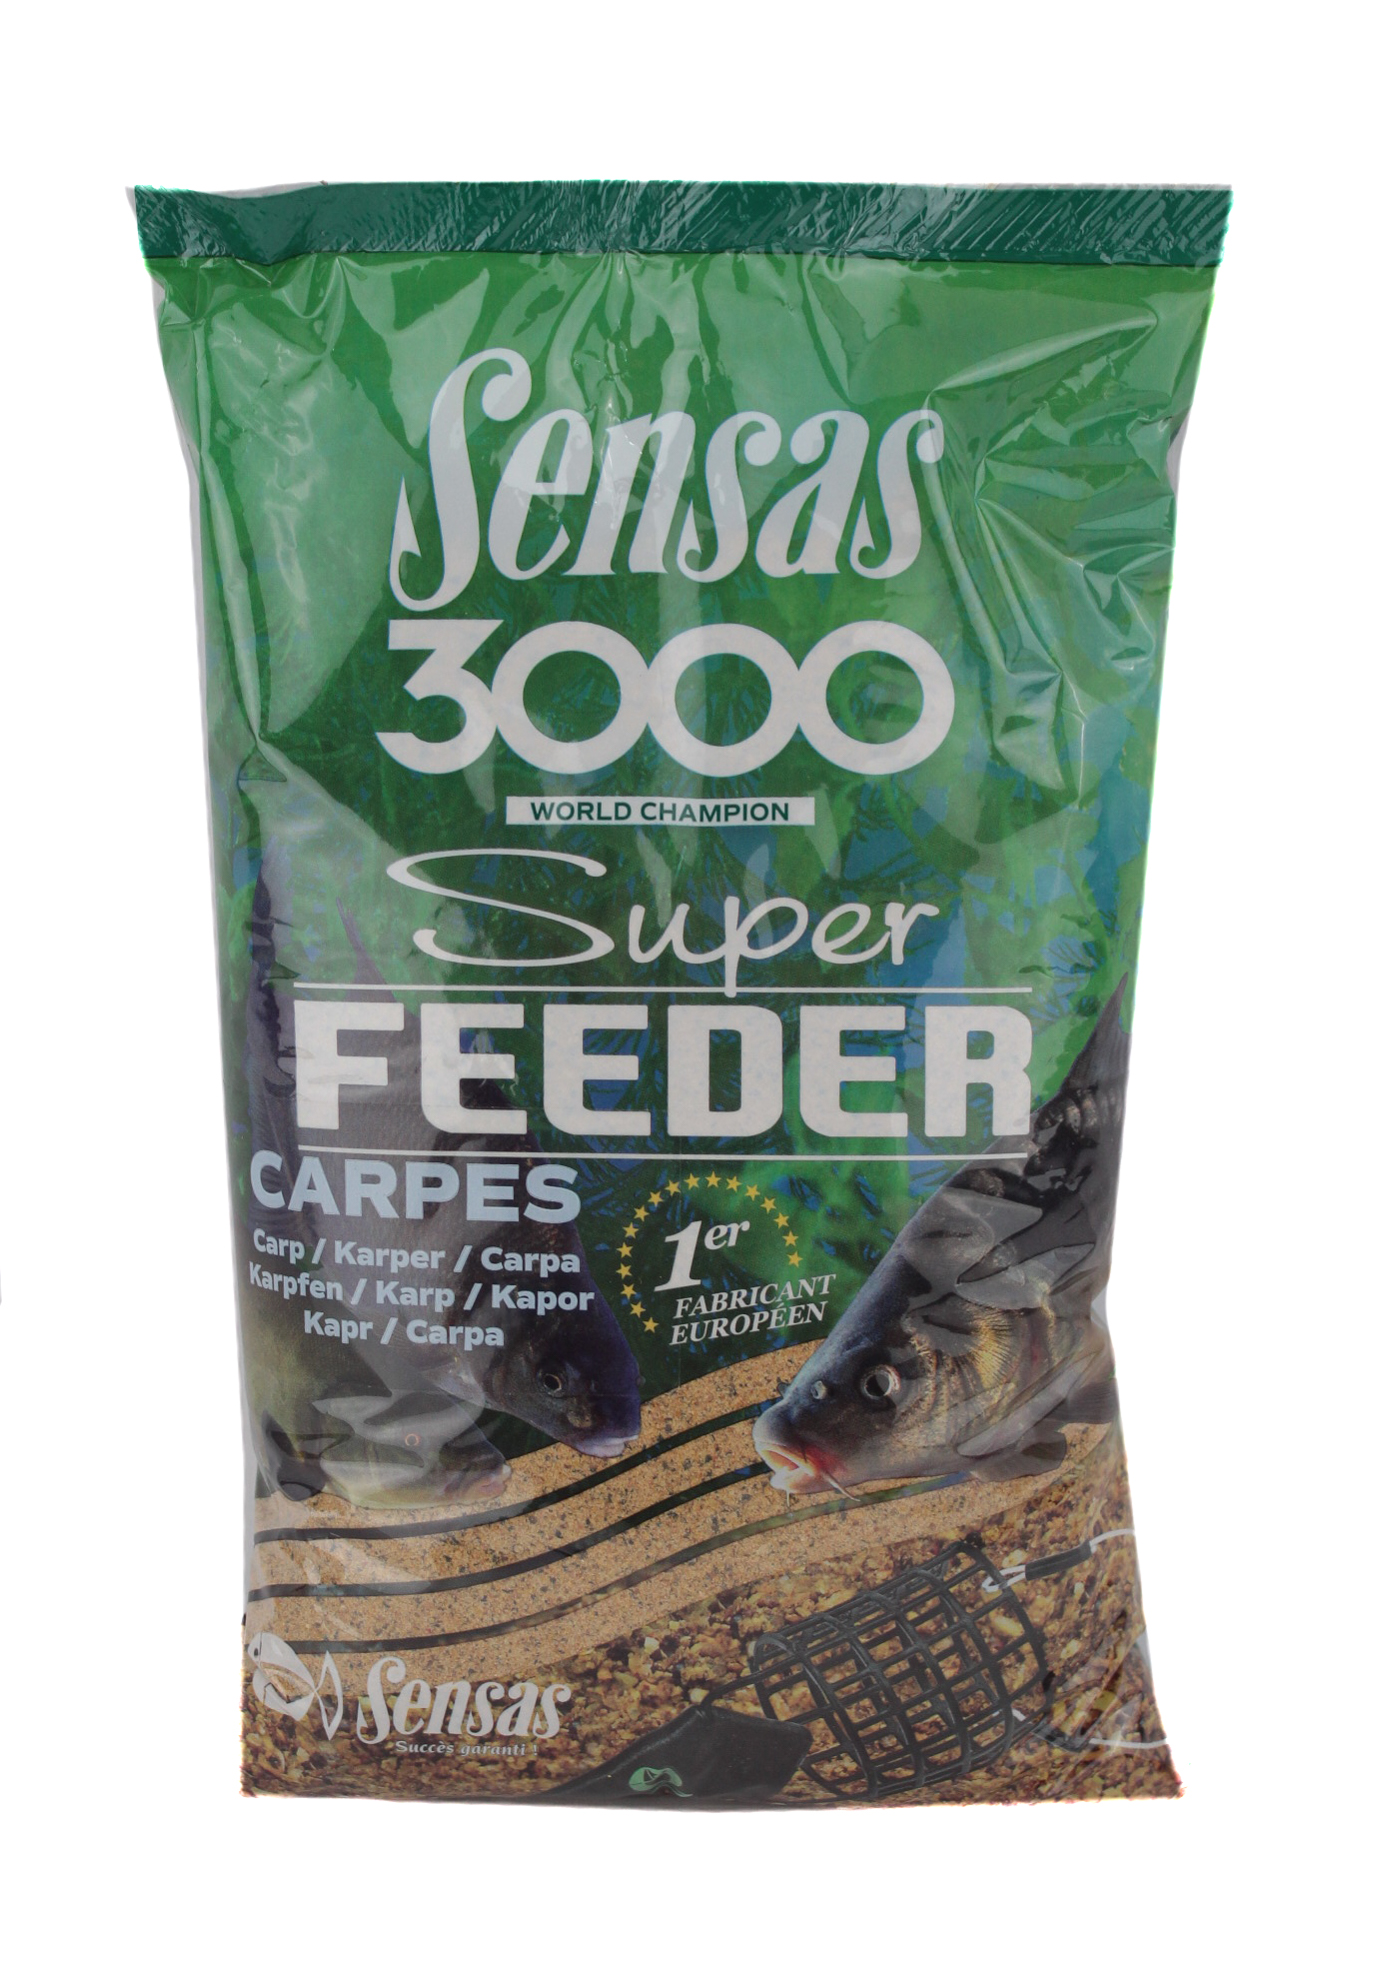 Прикормка Sensas 3000 1кг Super feeder carp  - фото 1